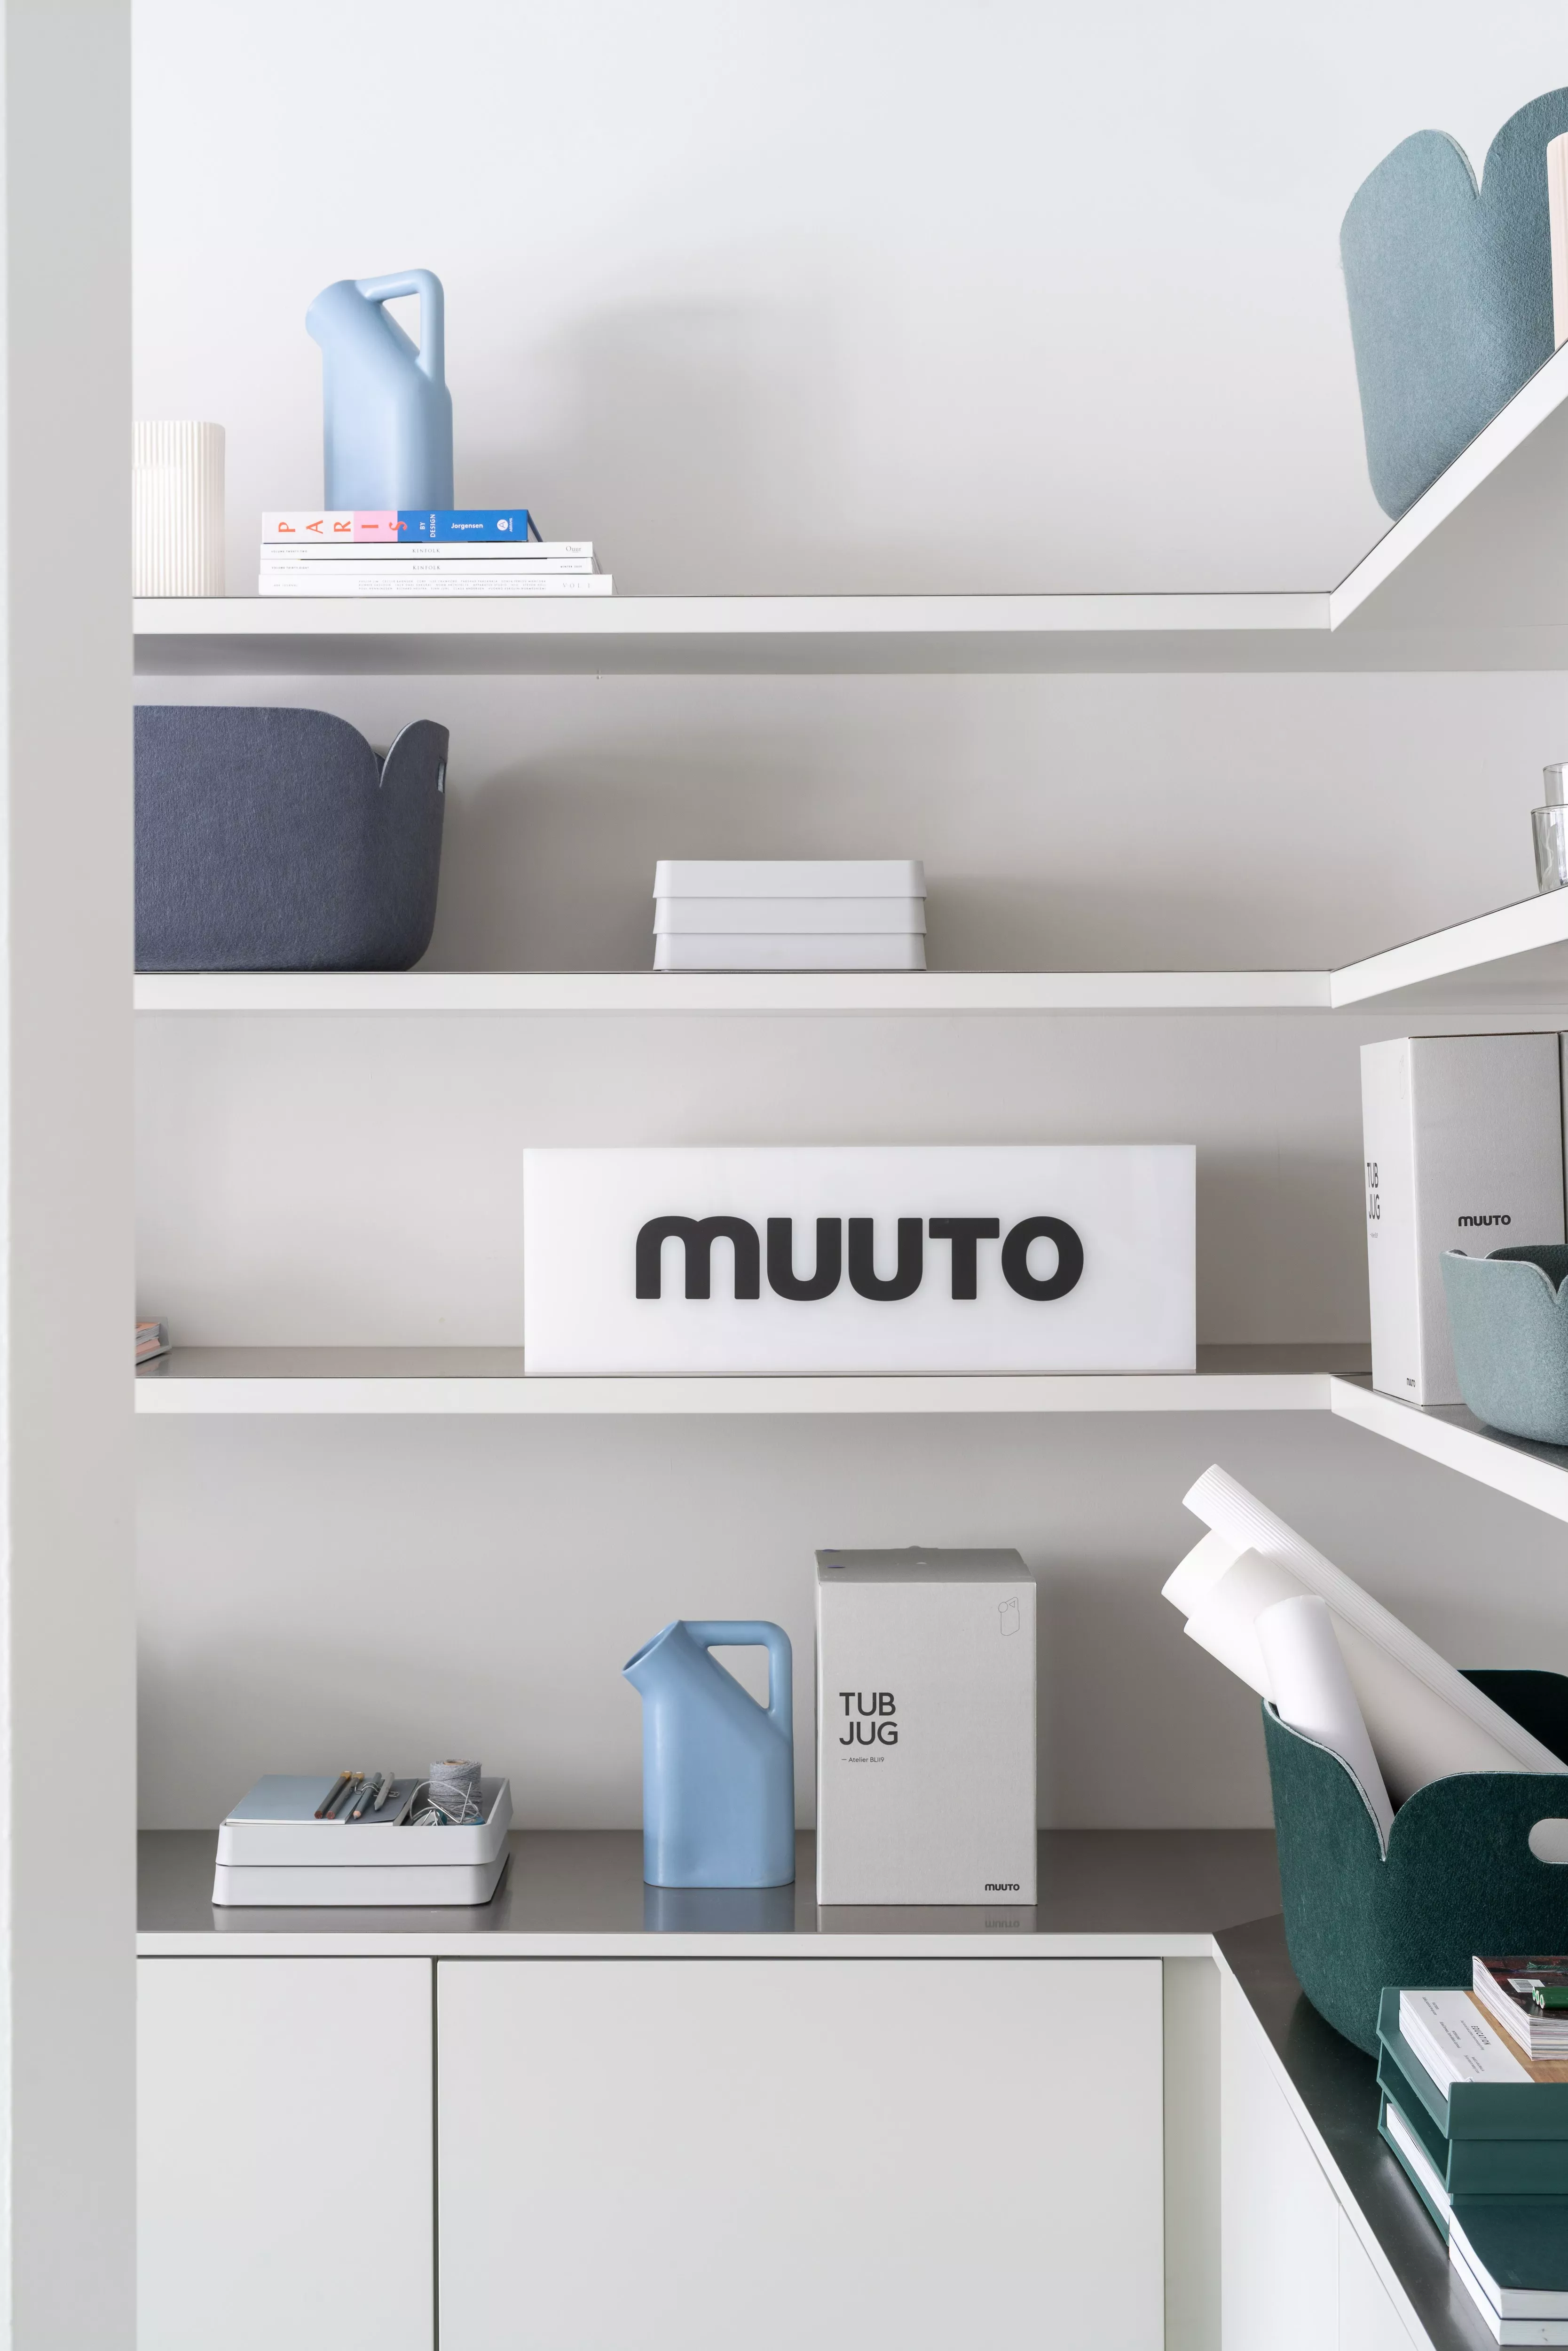 Muuto chooses HIMACS for its flagship European showrooms